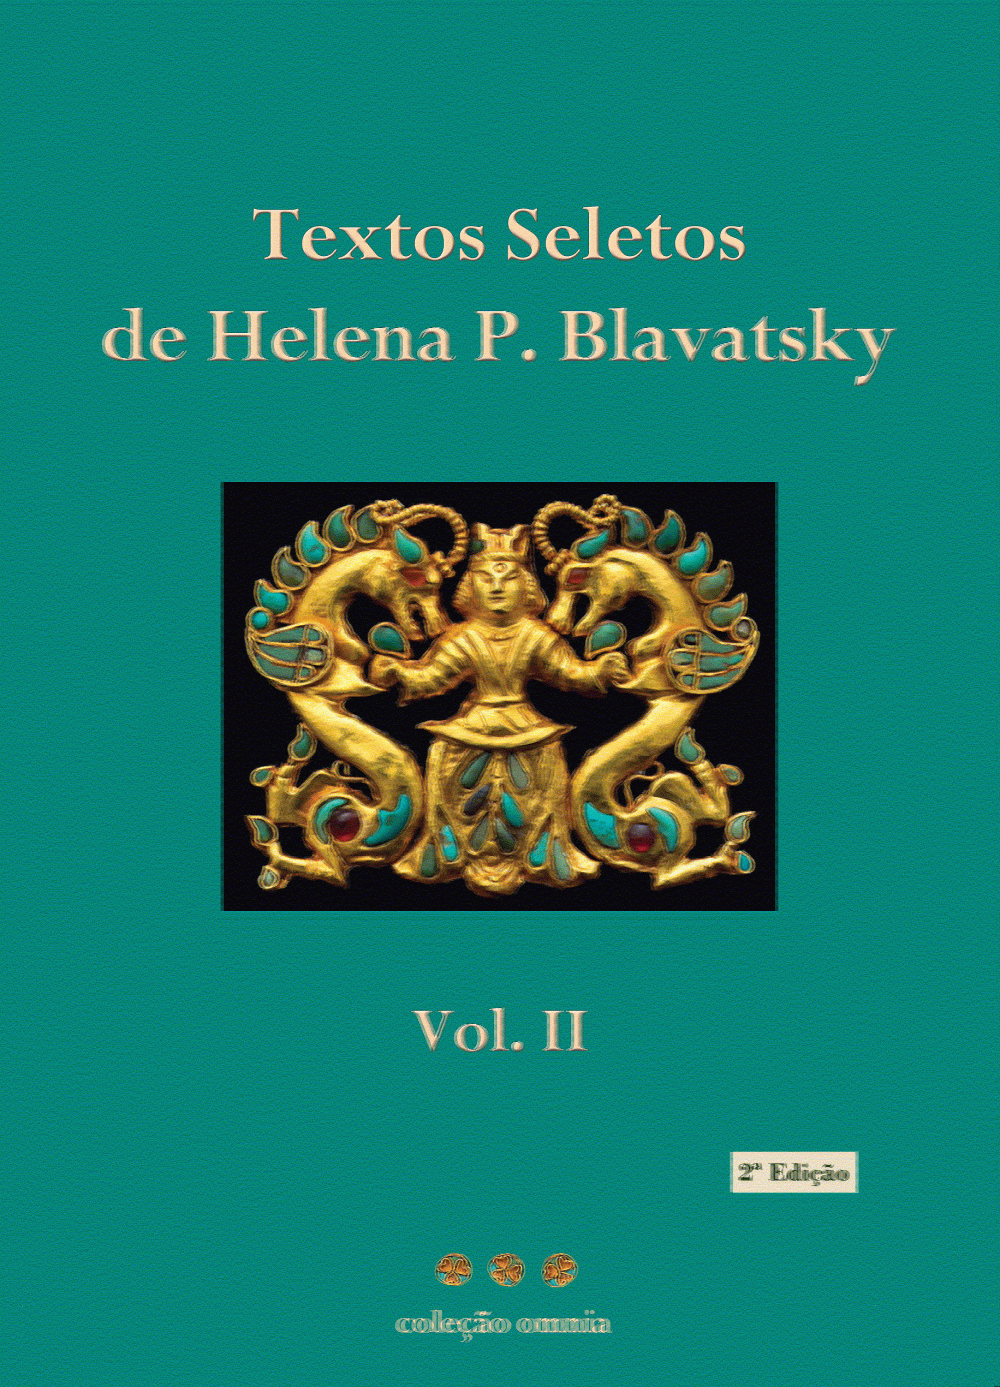 Textos Seletos de Helena P. Blavatsky, Vol. II (2ª edição)